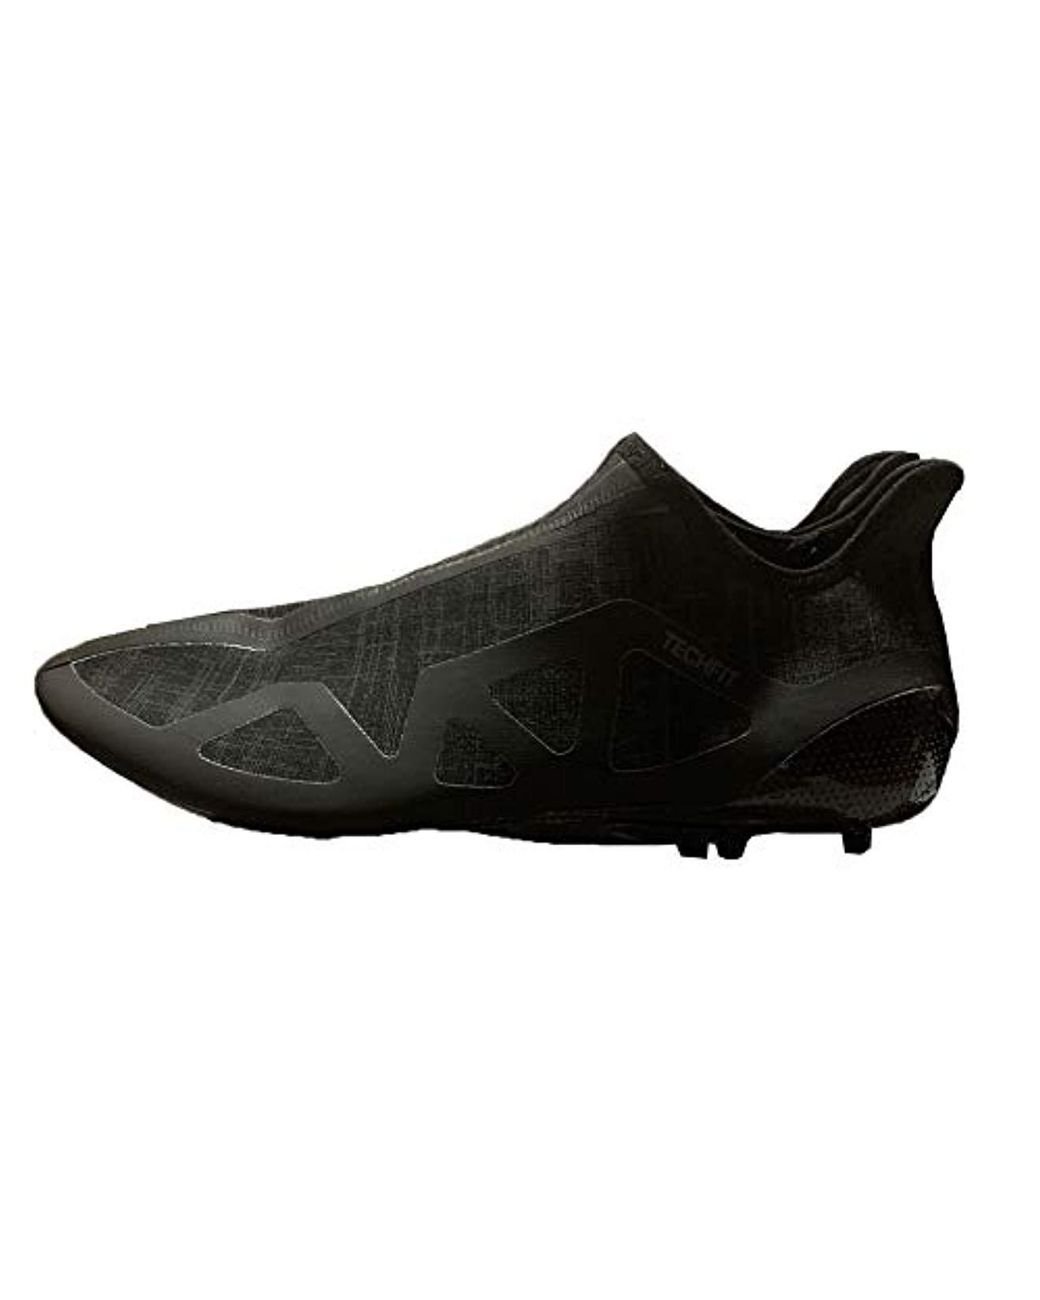 adidas Glitch Innershoe Football Boots Black, 9.5 Uk for Men | Lyst UK